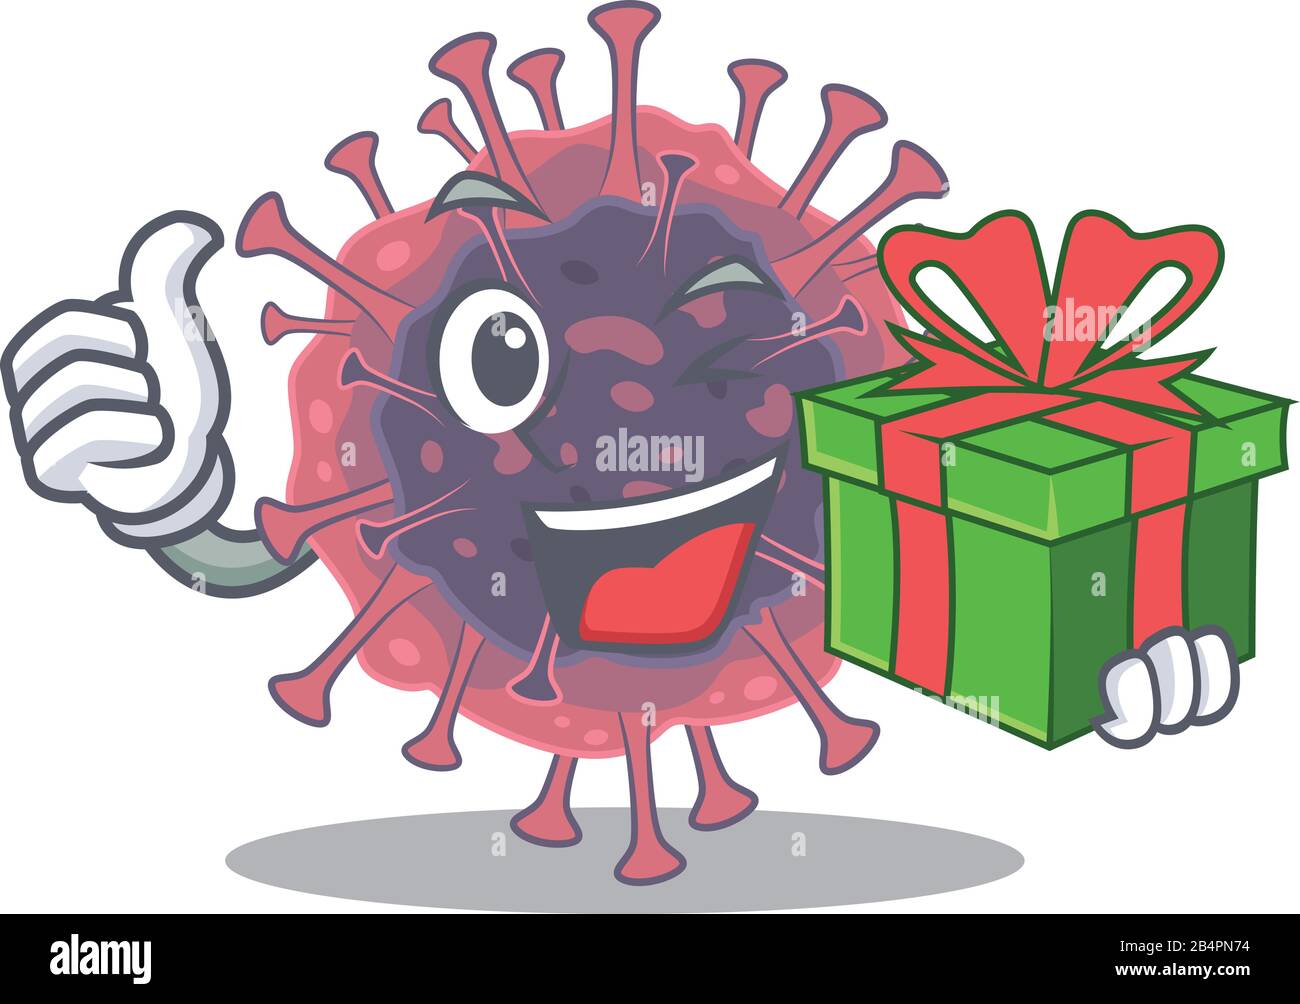 Smiley microbiology coronavirus cartoon character having a gift box Stock Vector